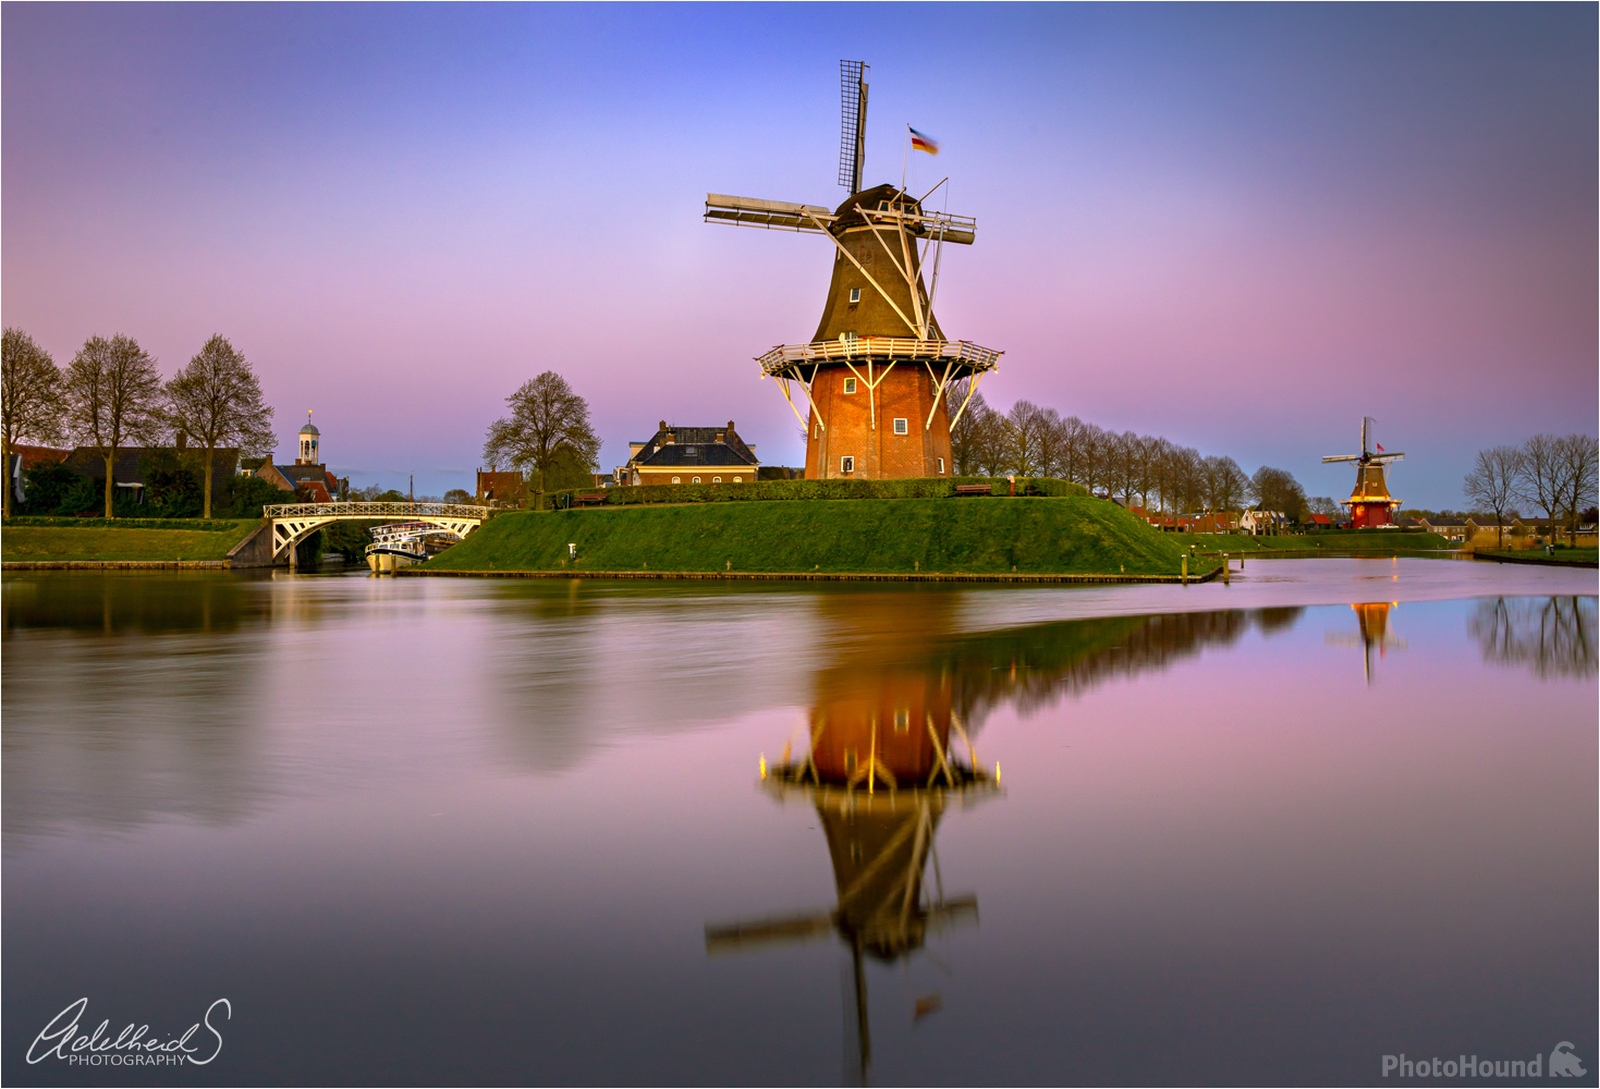 Image of Windmills of Dokkum in Friesland by Adelheid Smitt